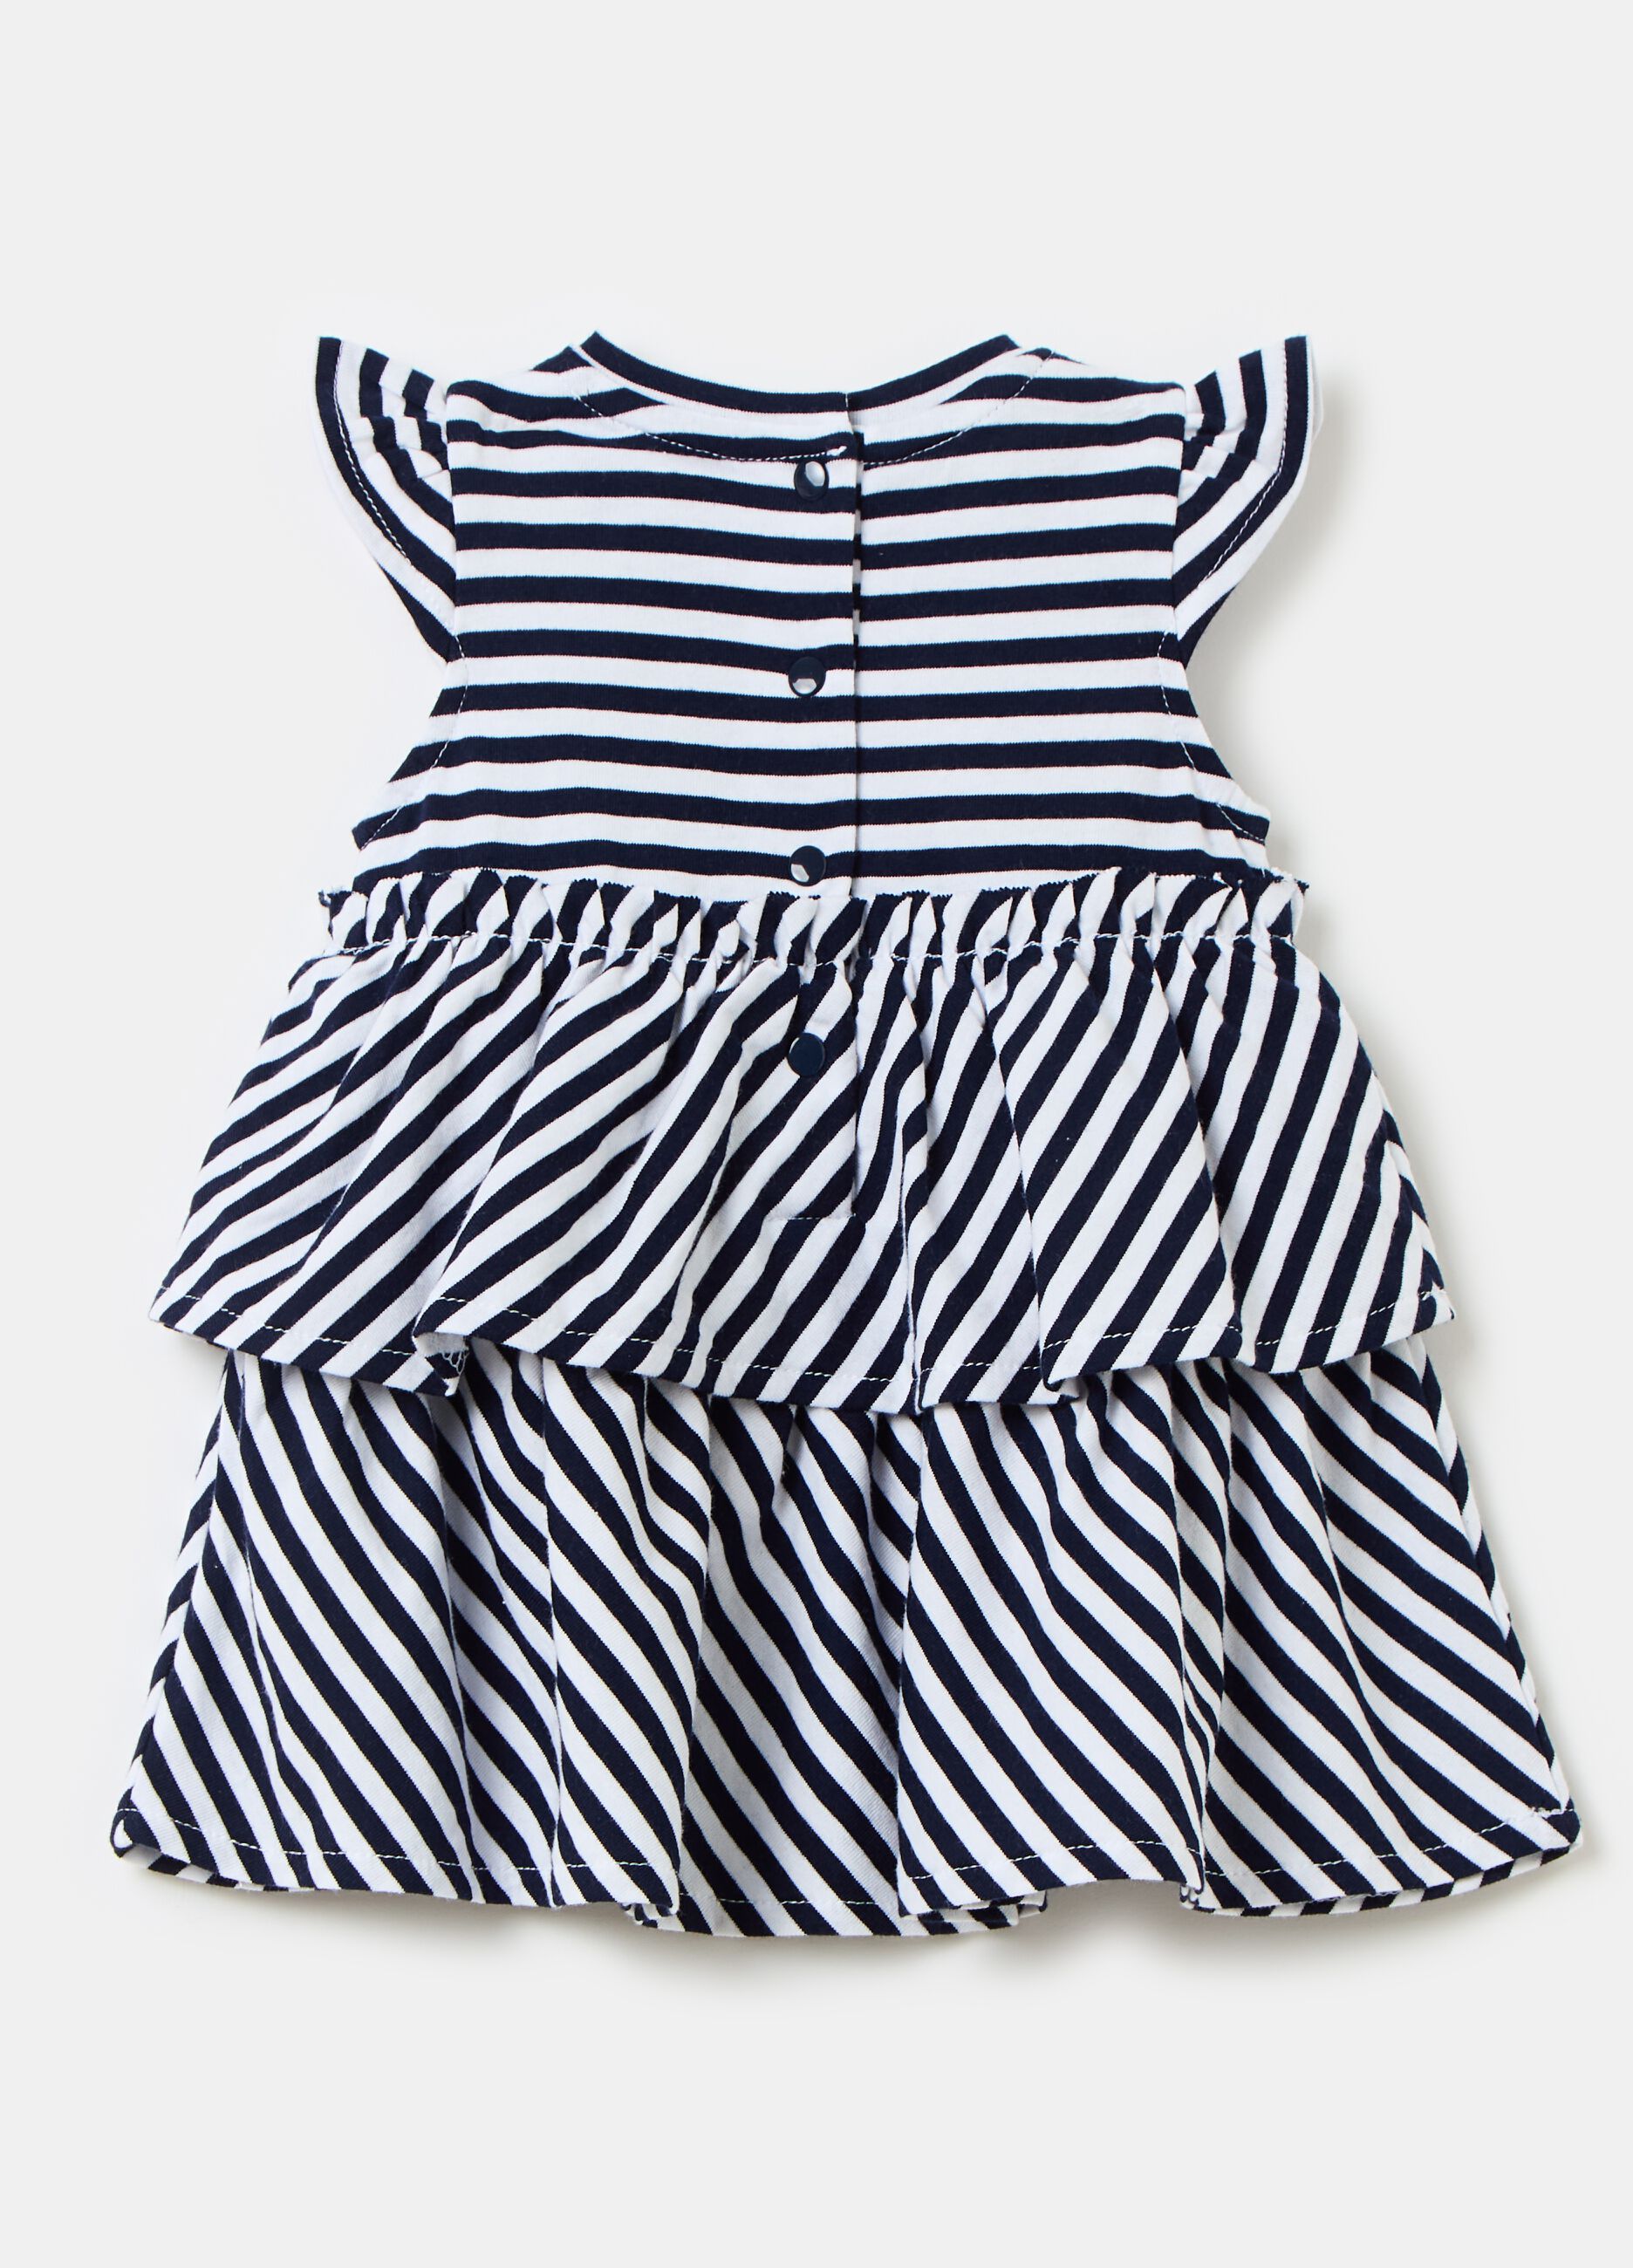 Organic cotton dress with striped pattern